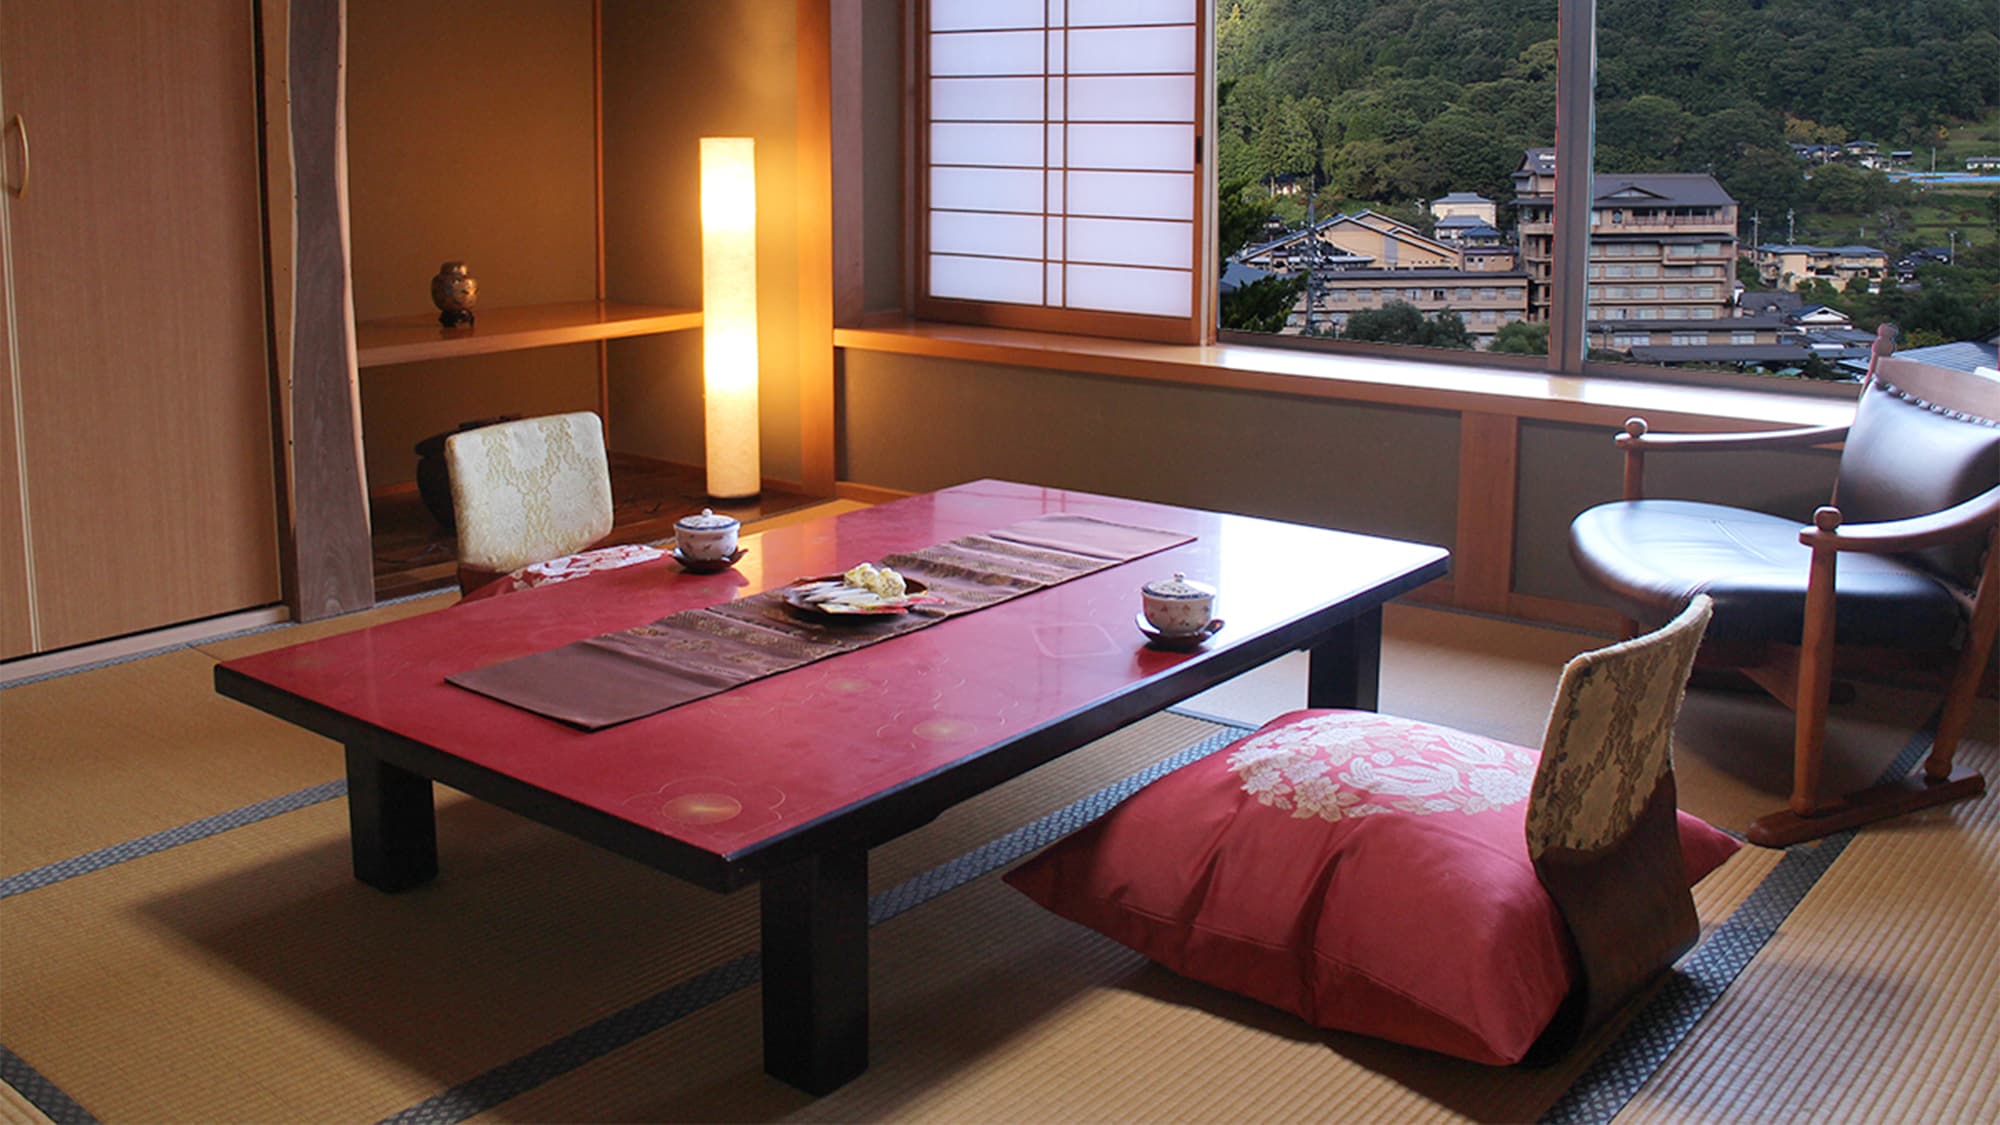 ◇ Away ◇ (Japanese-style room 8 tatami mats)